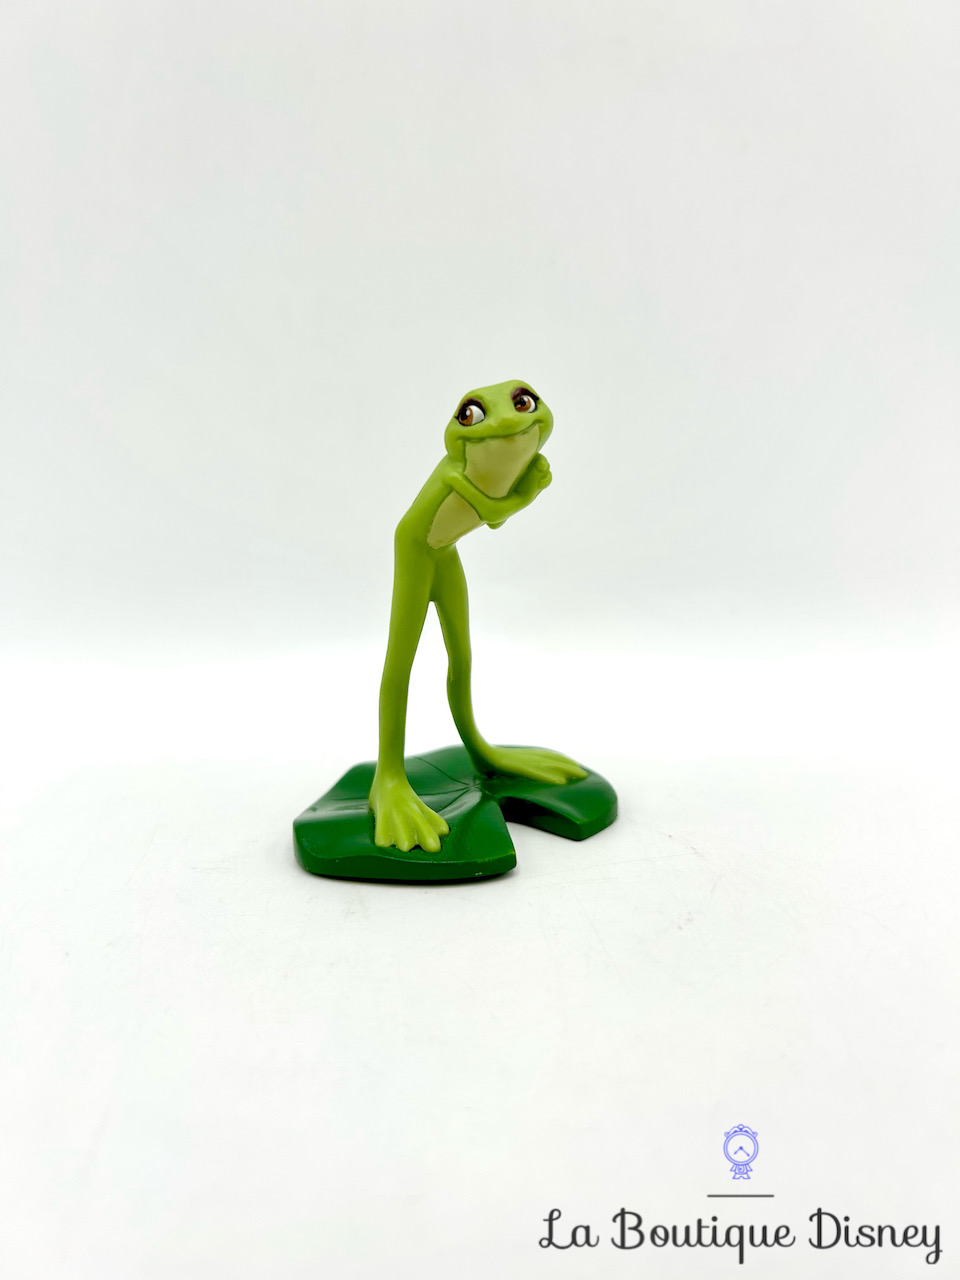 figurine-tiana-grenouille-disney-store-playset-la-princesse-et-la-grenouille-1